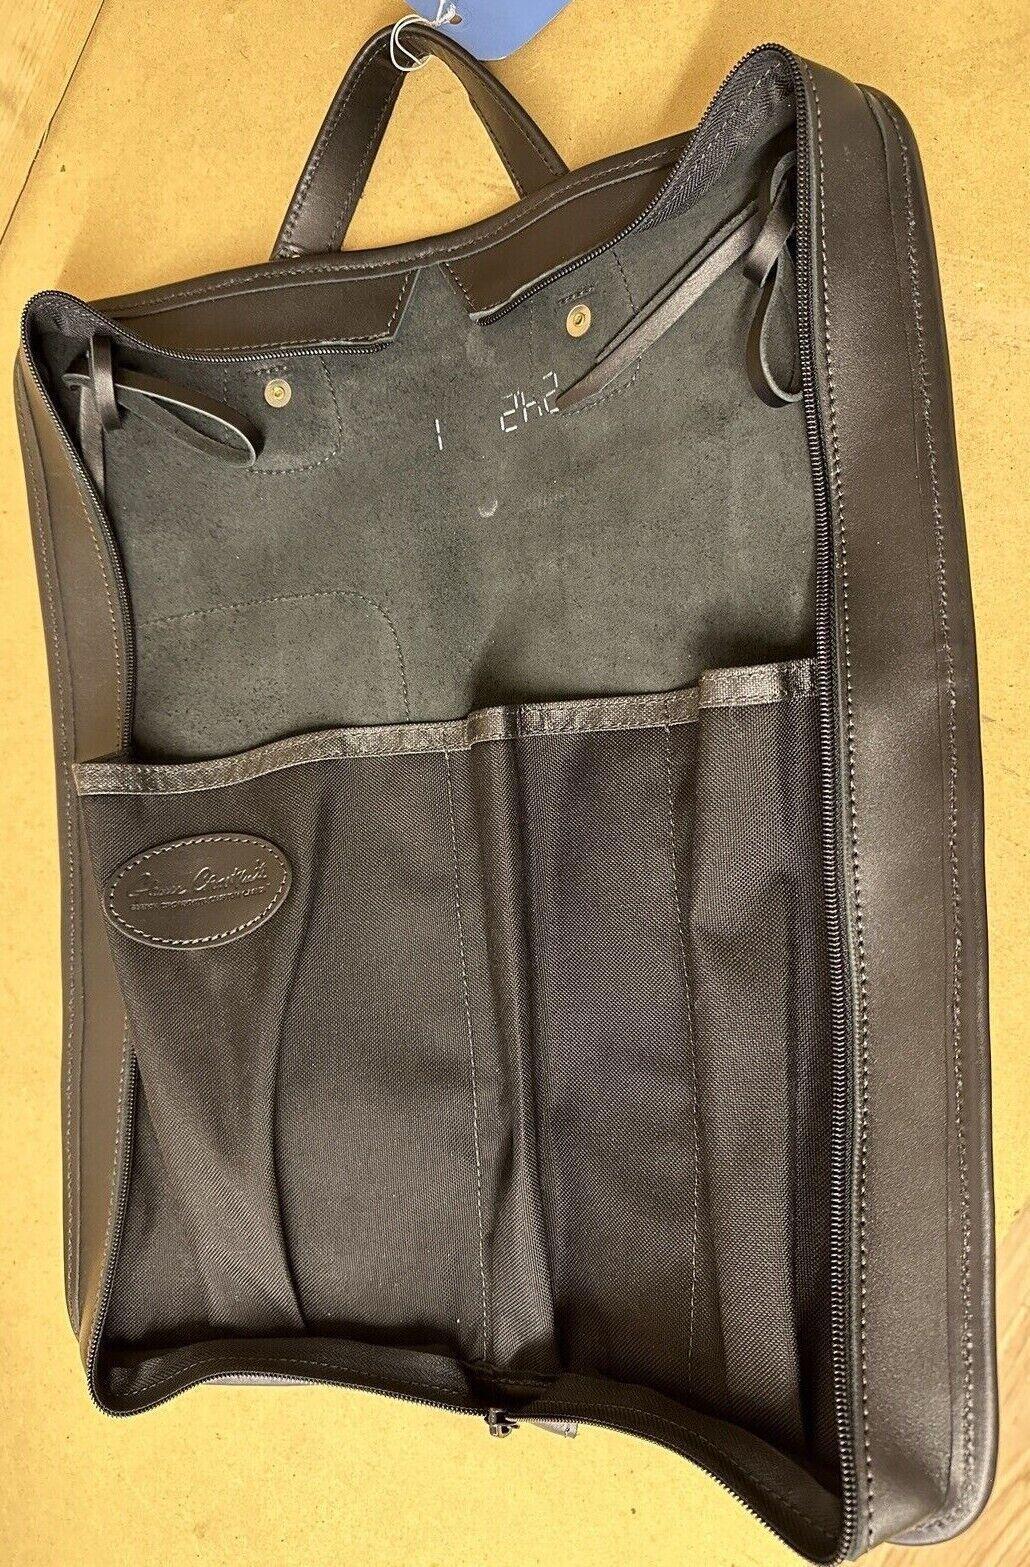 Cases　Used　Custom　Sweetwater's　Glenn　Exchange　Bag　Cronkhite　Mallet　Gear